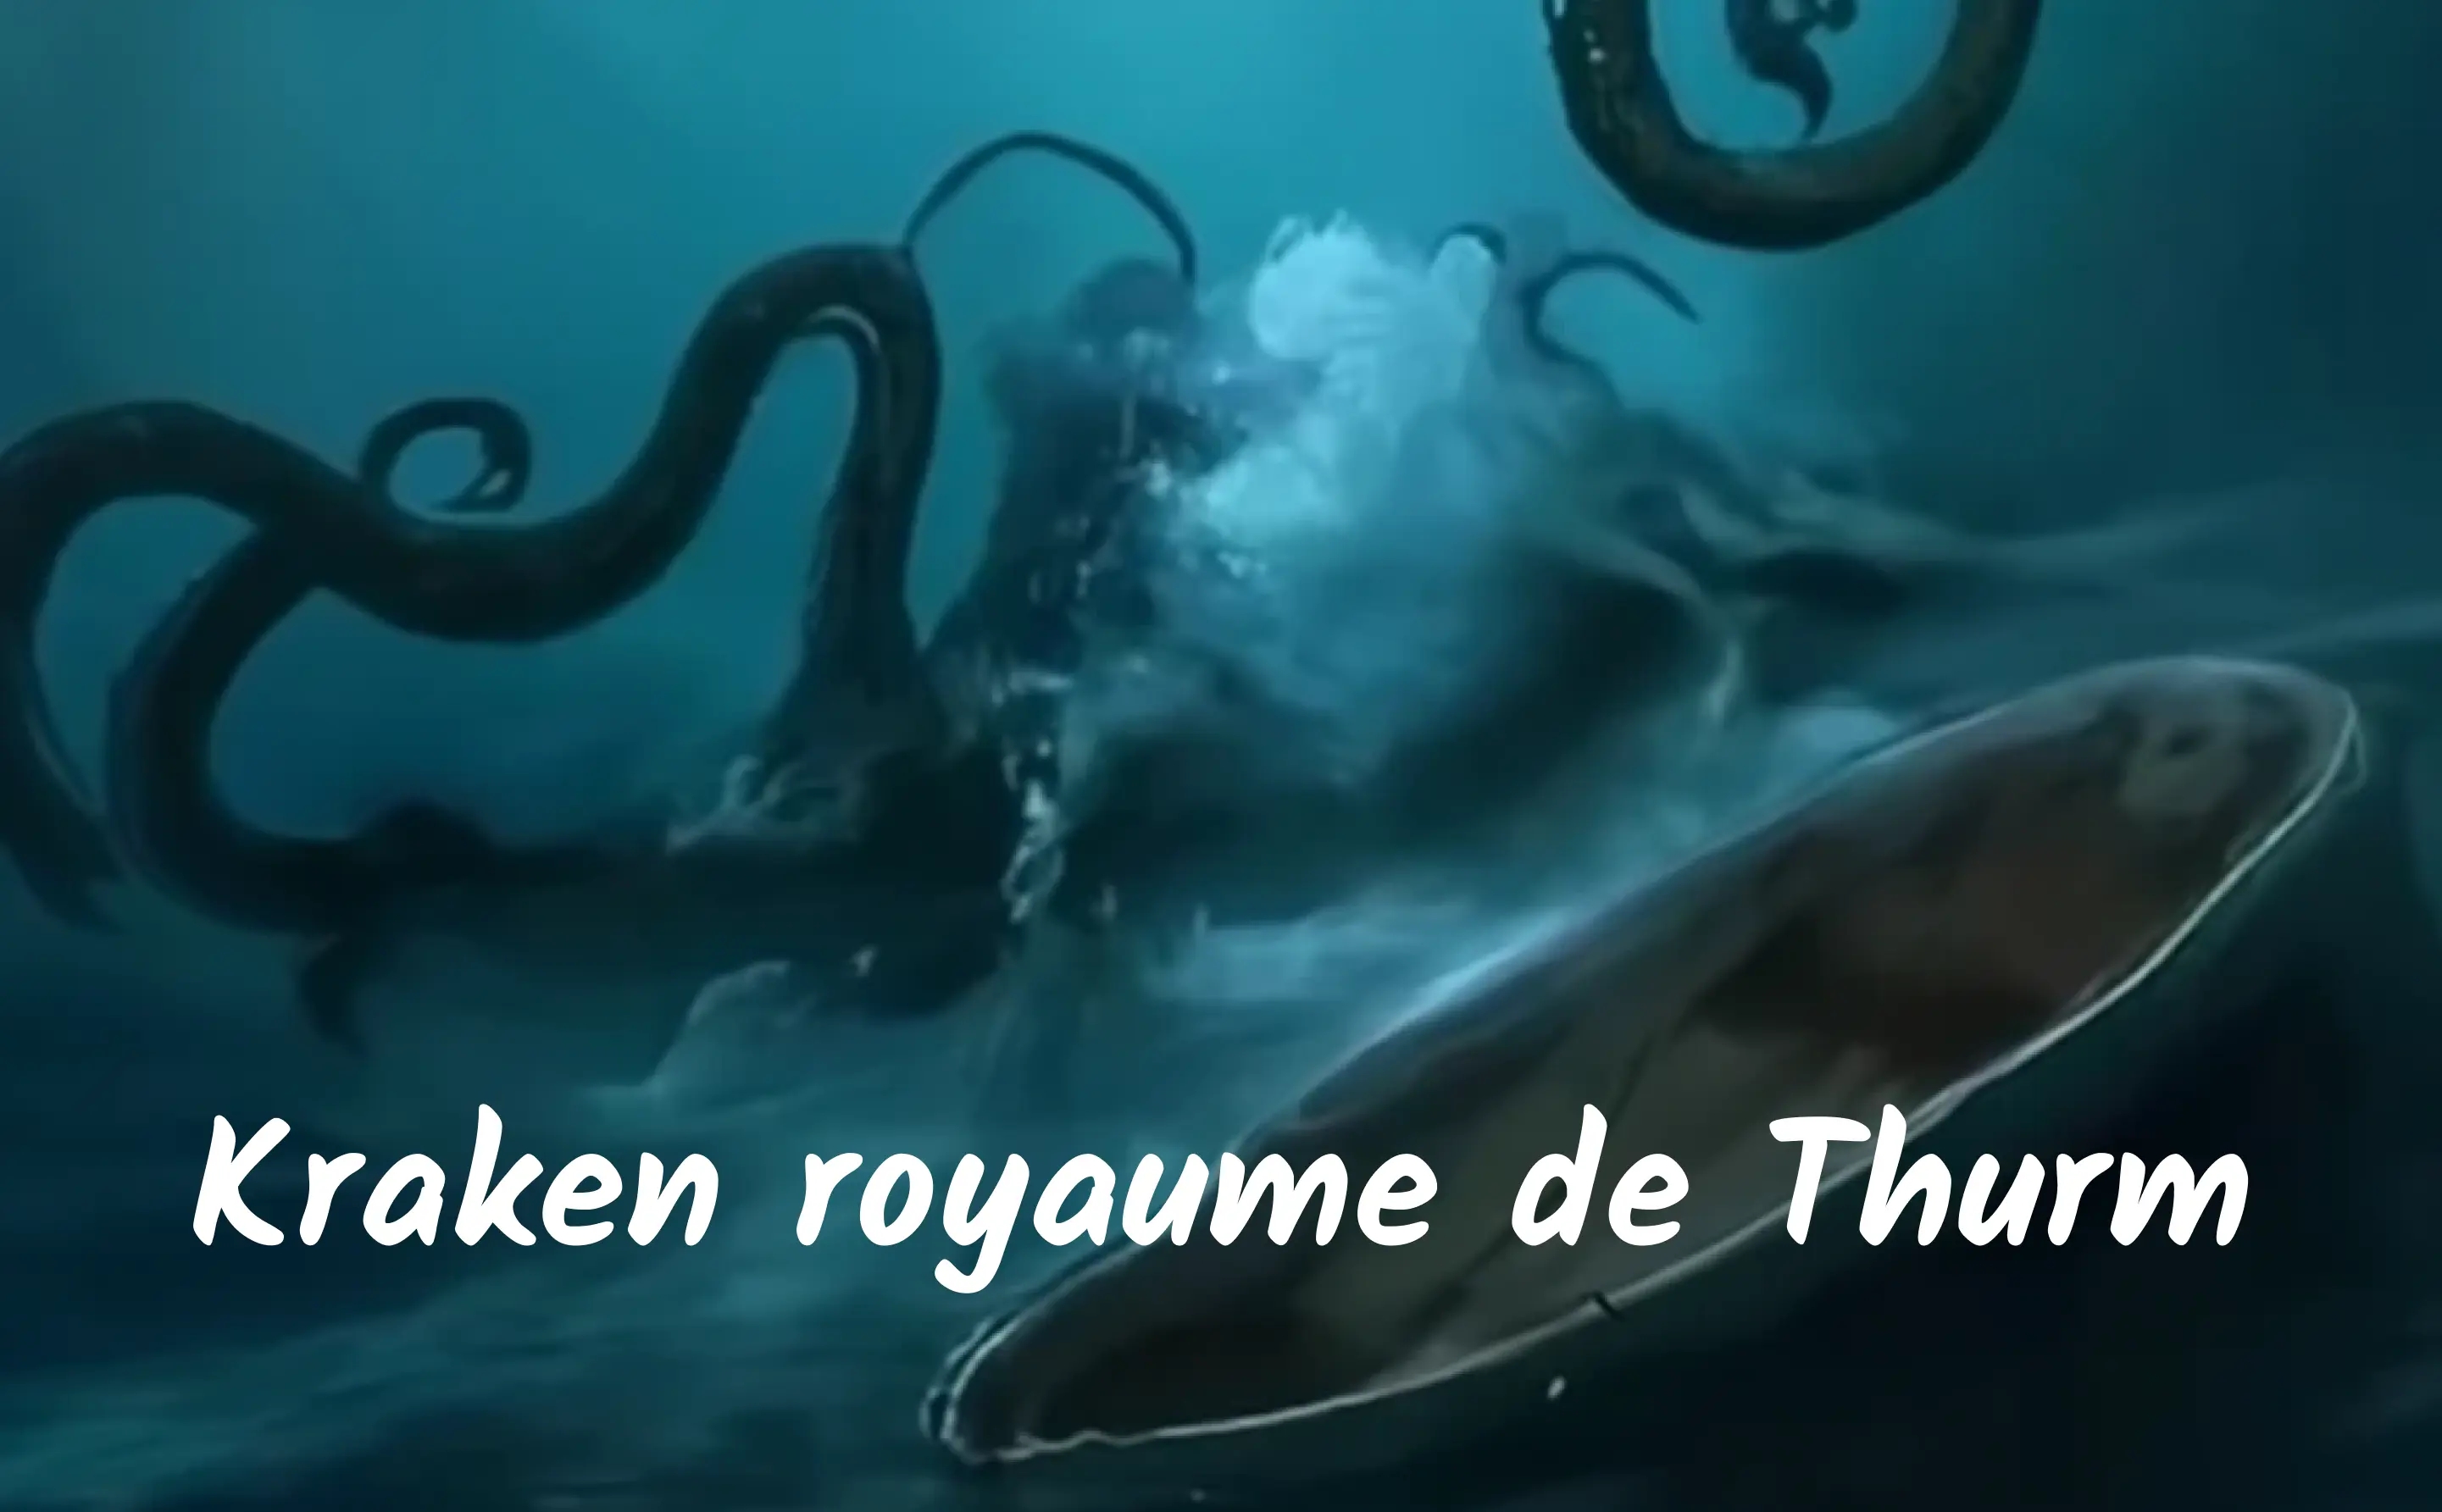 Kraken royaume de Thurm